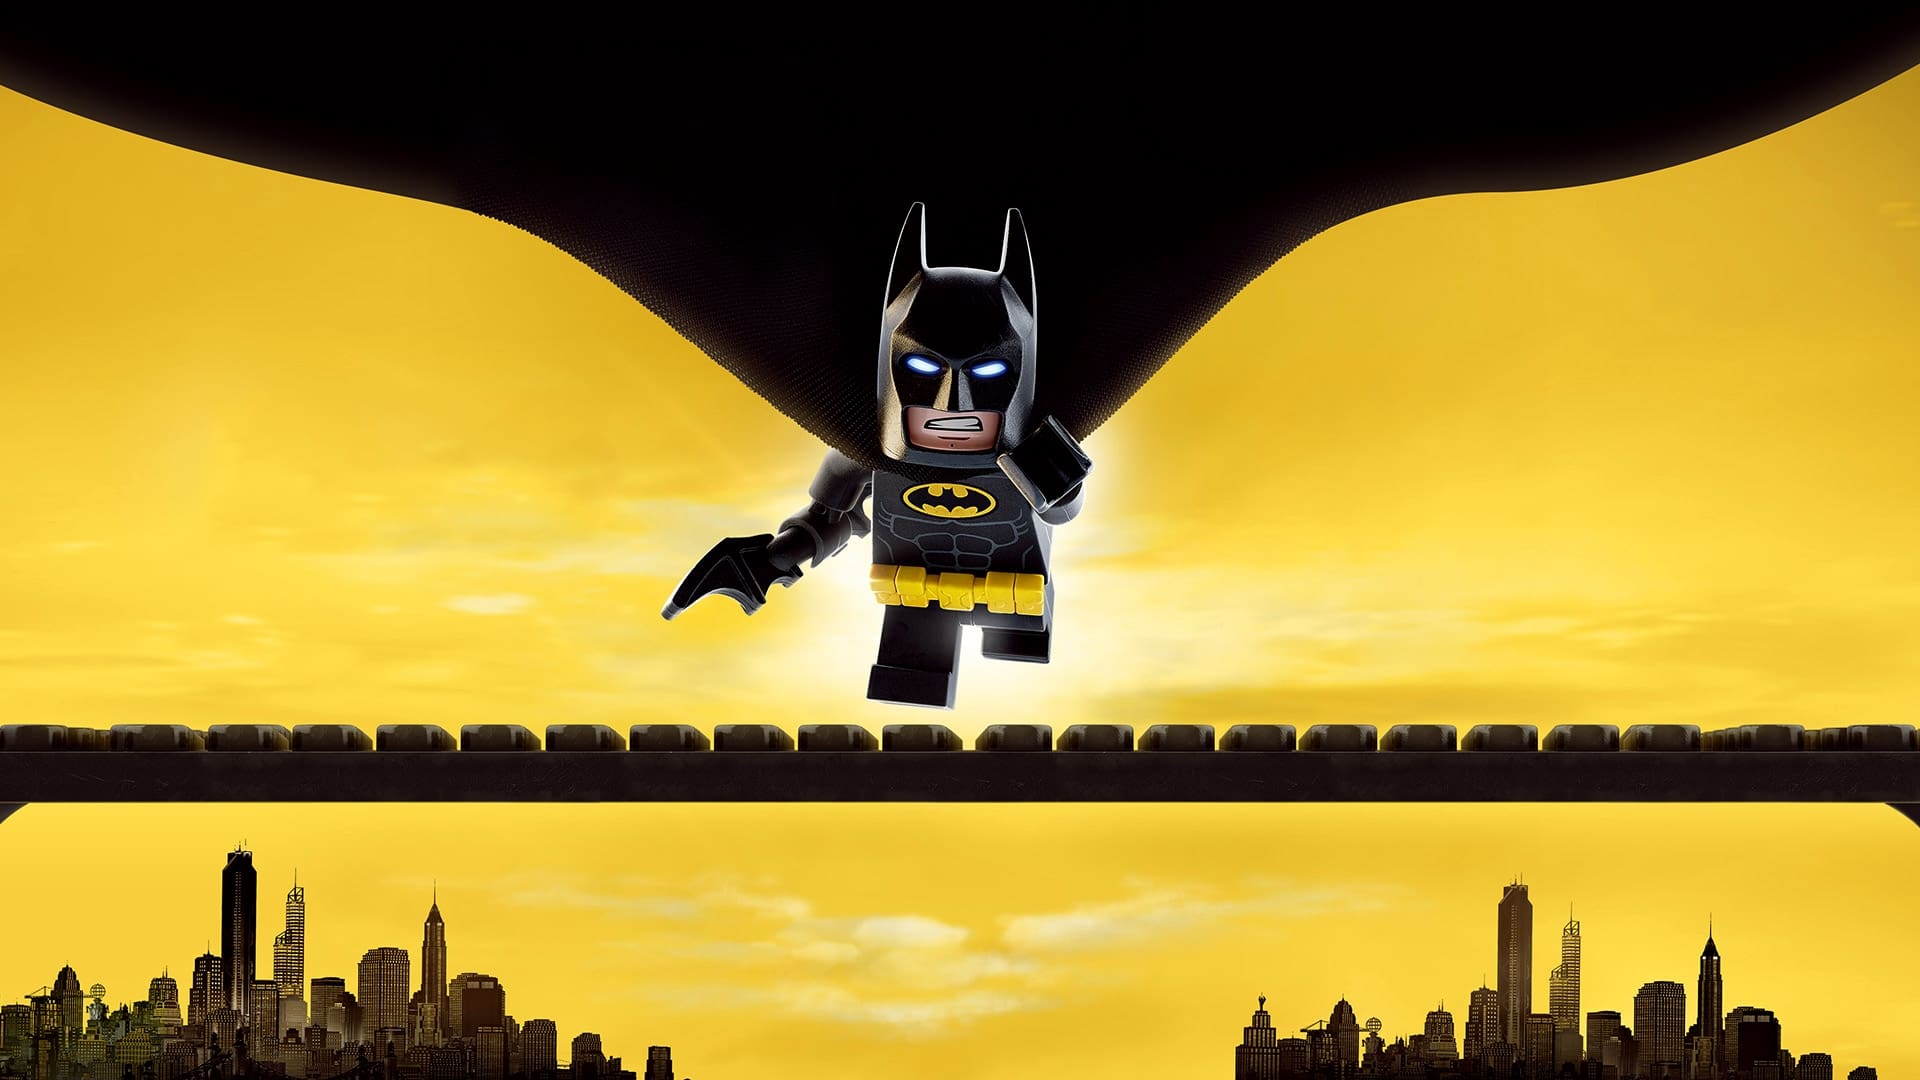 Image du film Lego Batman : le film rzrjj6wxsg5bemcbpq3guvaf0ejjpg